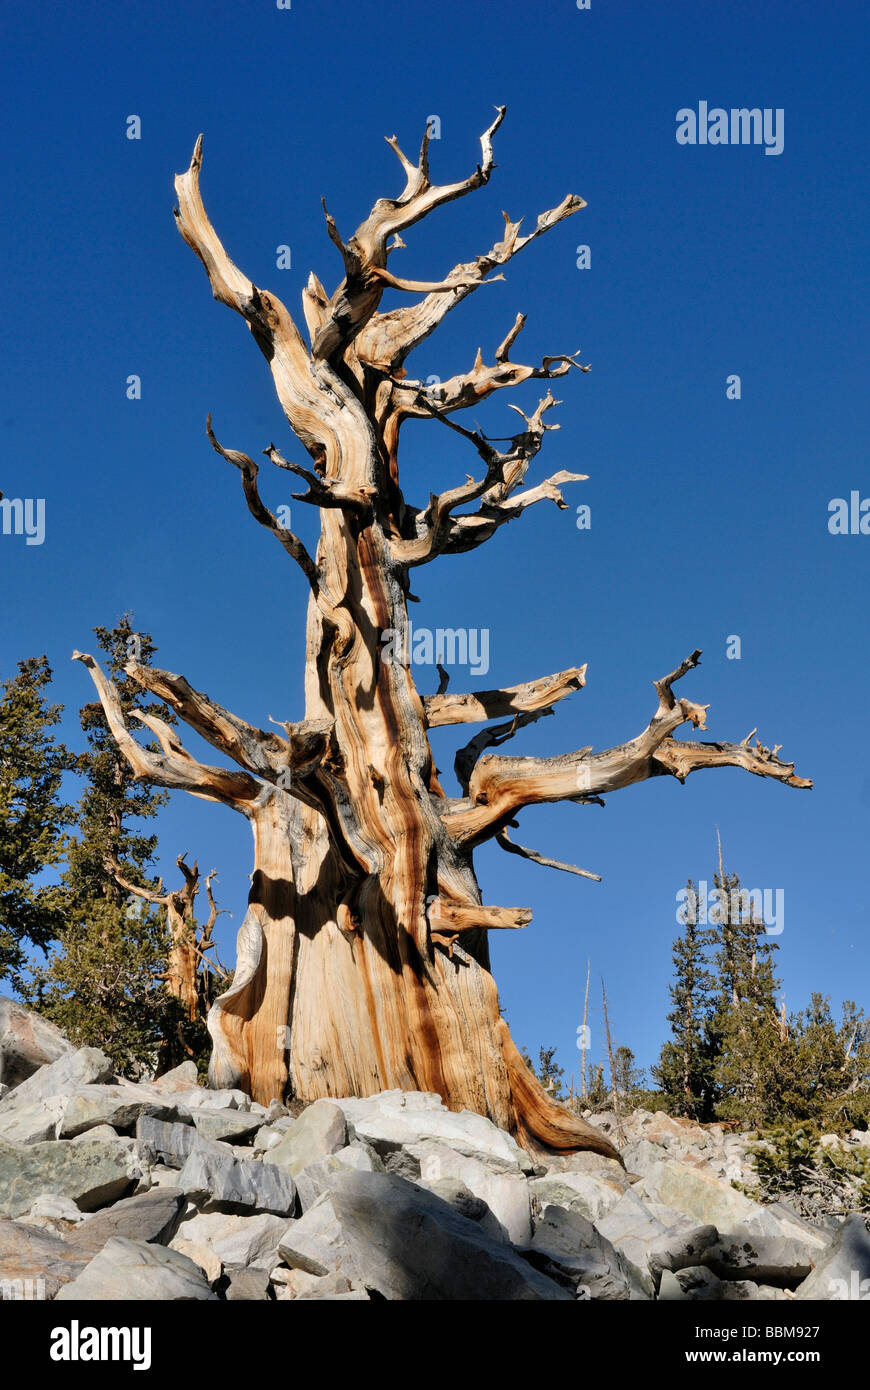 Bristlecone Pine trees (Pinus aristata), between 2000 and 3000 years old, Bristlecone Pine Grove, Great Basin National Park, Ne Stock Photo